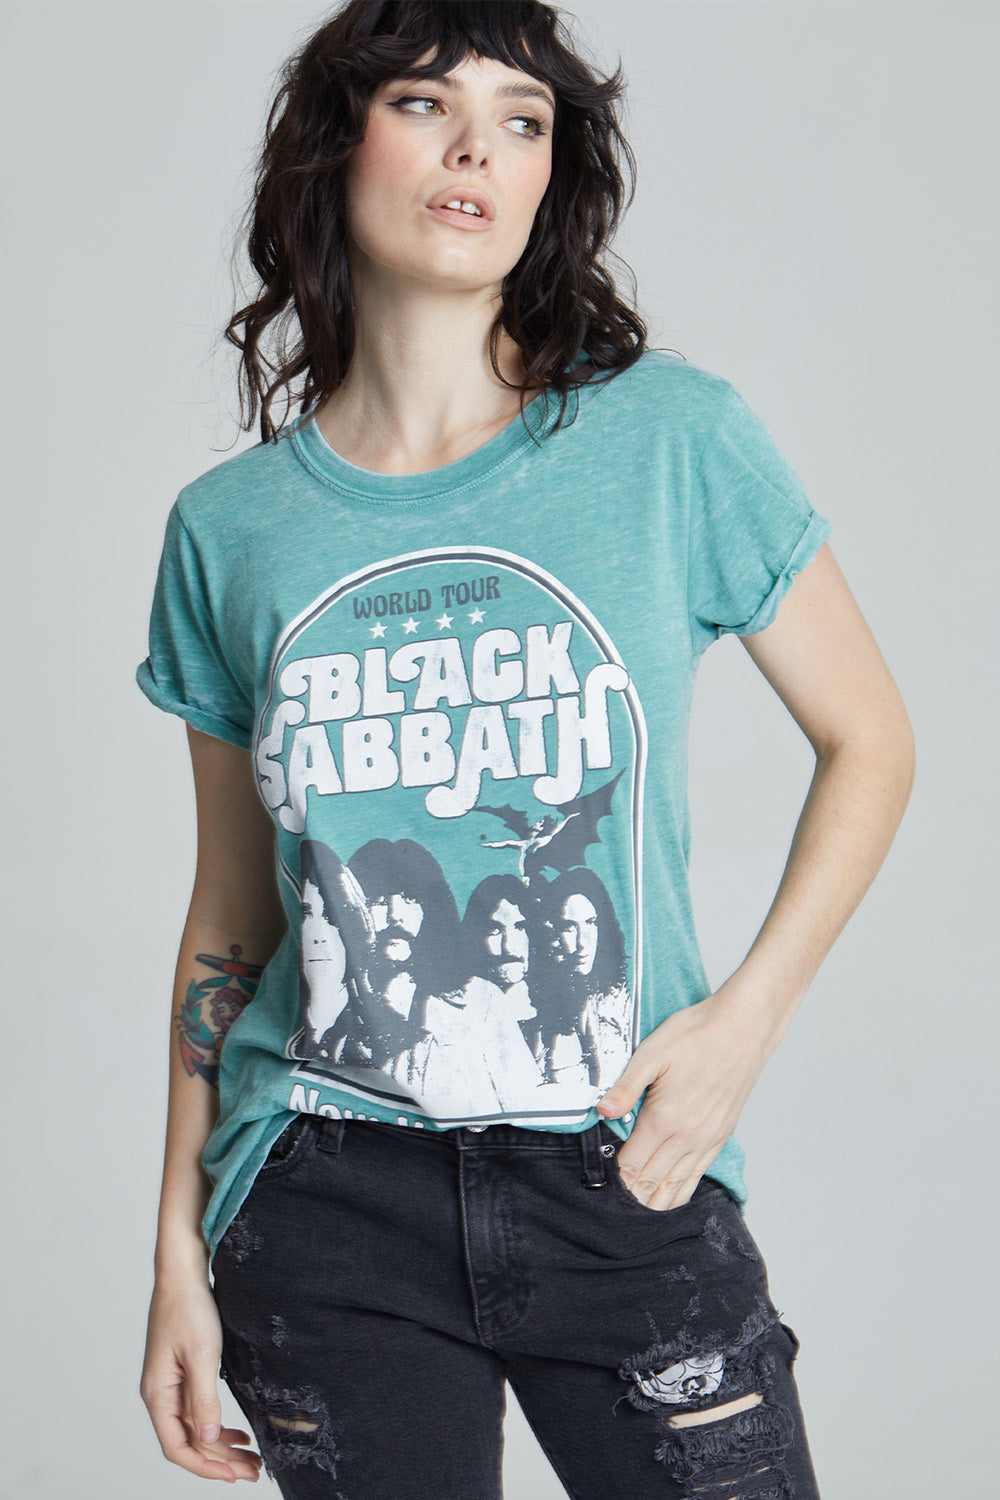 Recycled Black Sabbath Recycled Karma